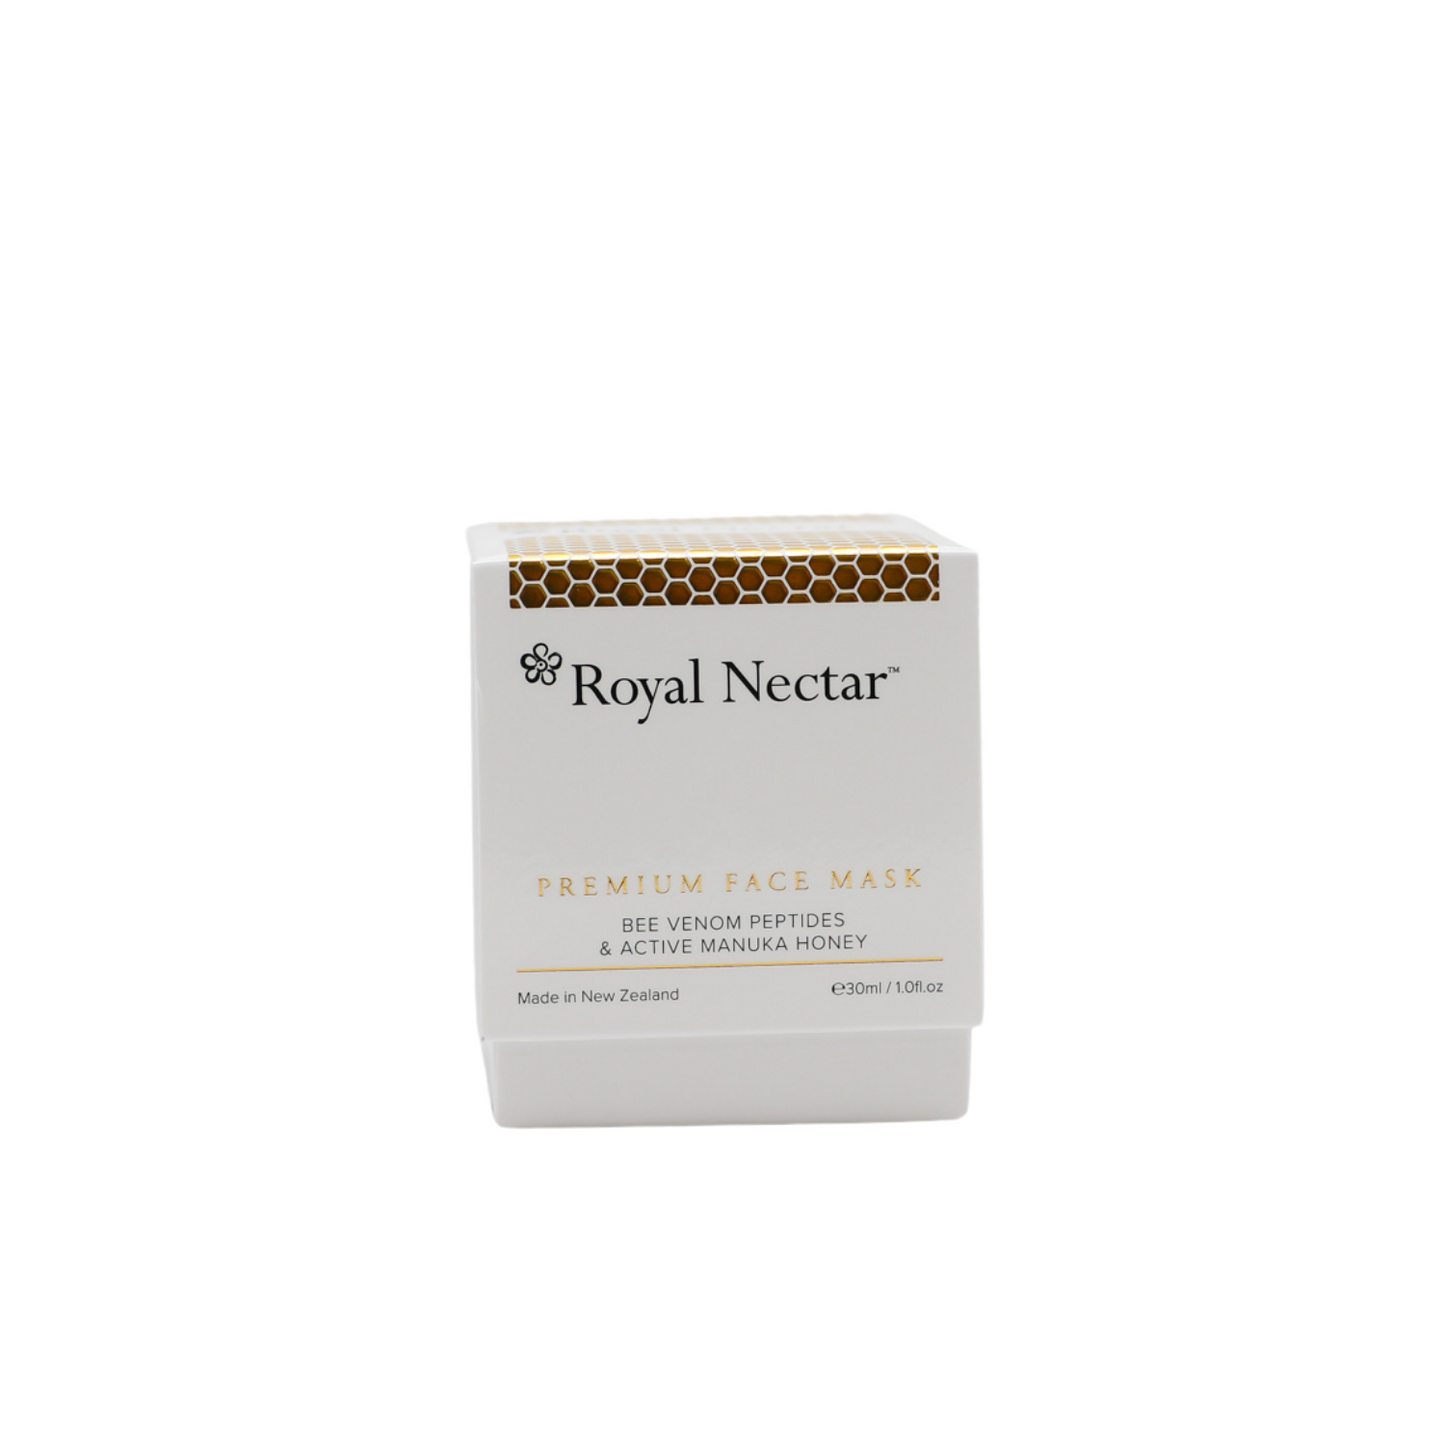 Royal Nectar Premium Face Mask